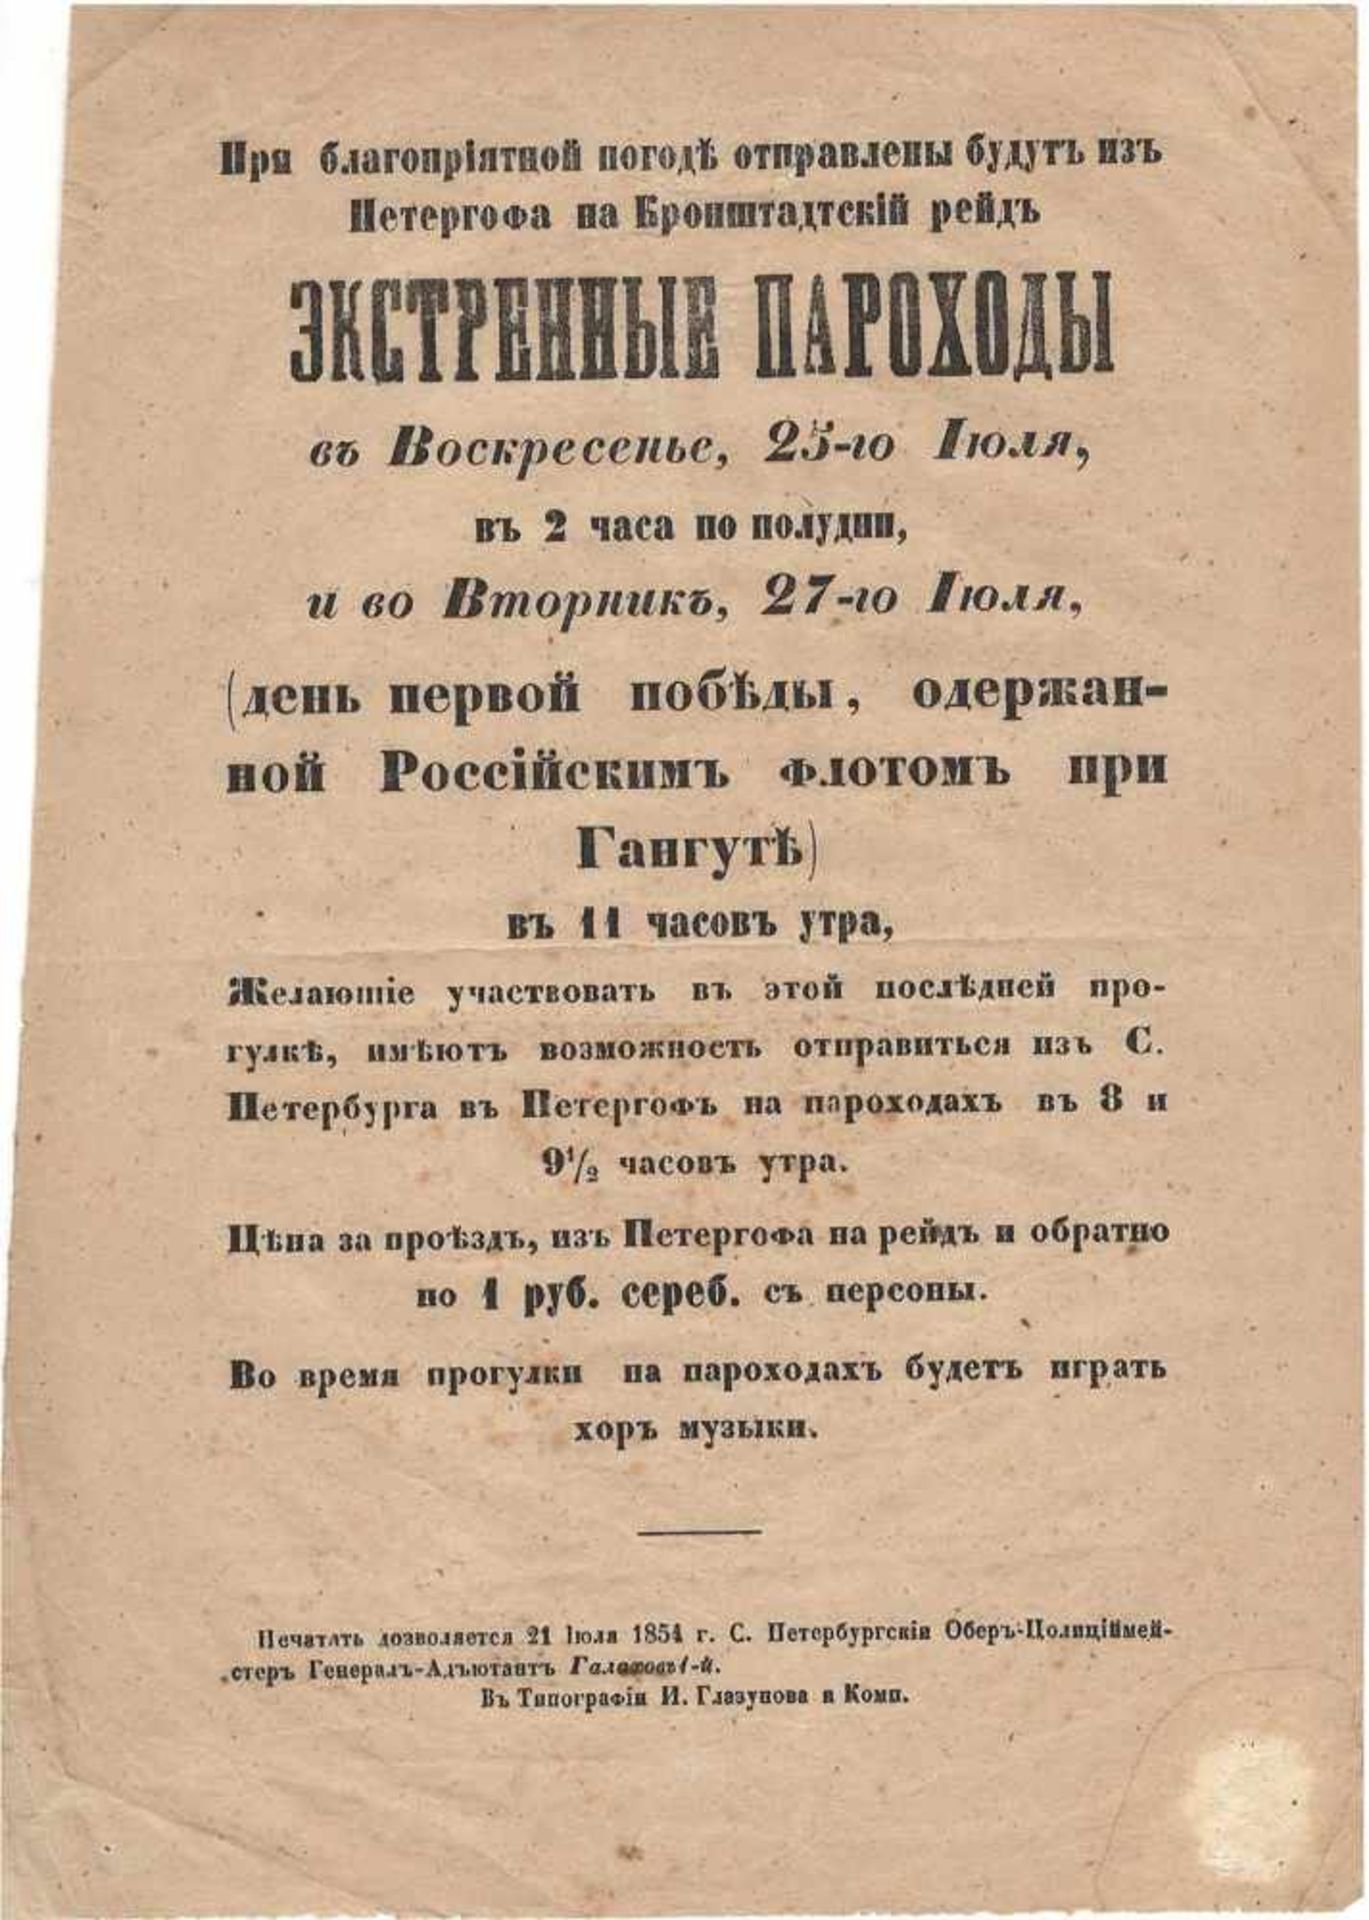 Announcement of emergency steamers dispatch from Peterhof to Kronstadt raid. - SPb .: Glazunov and